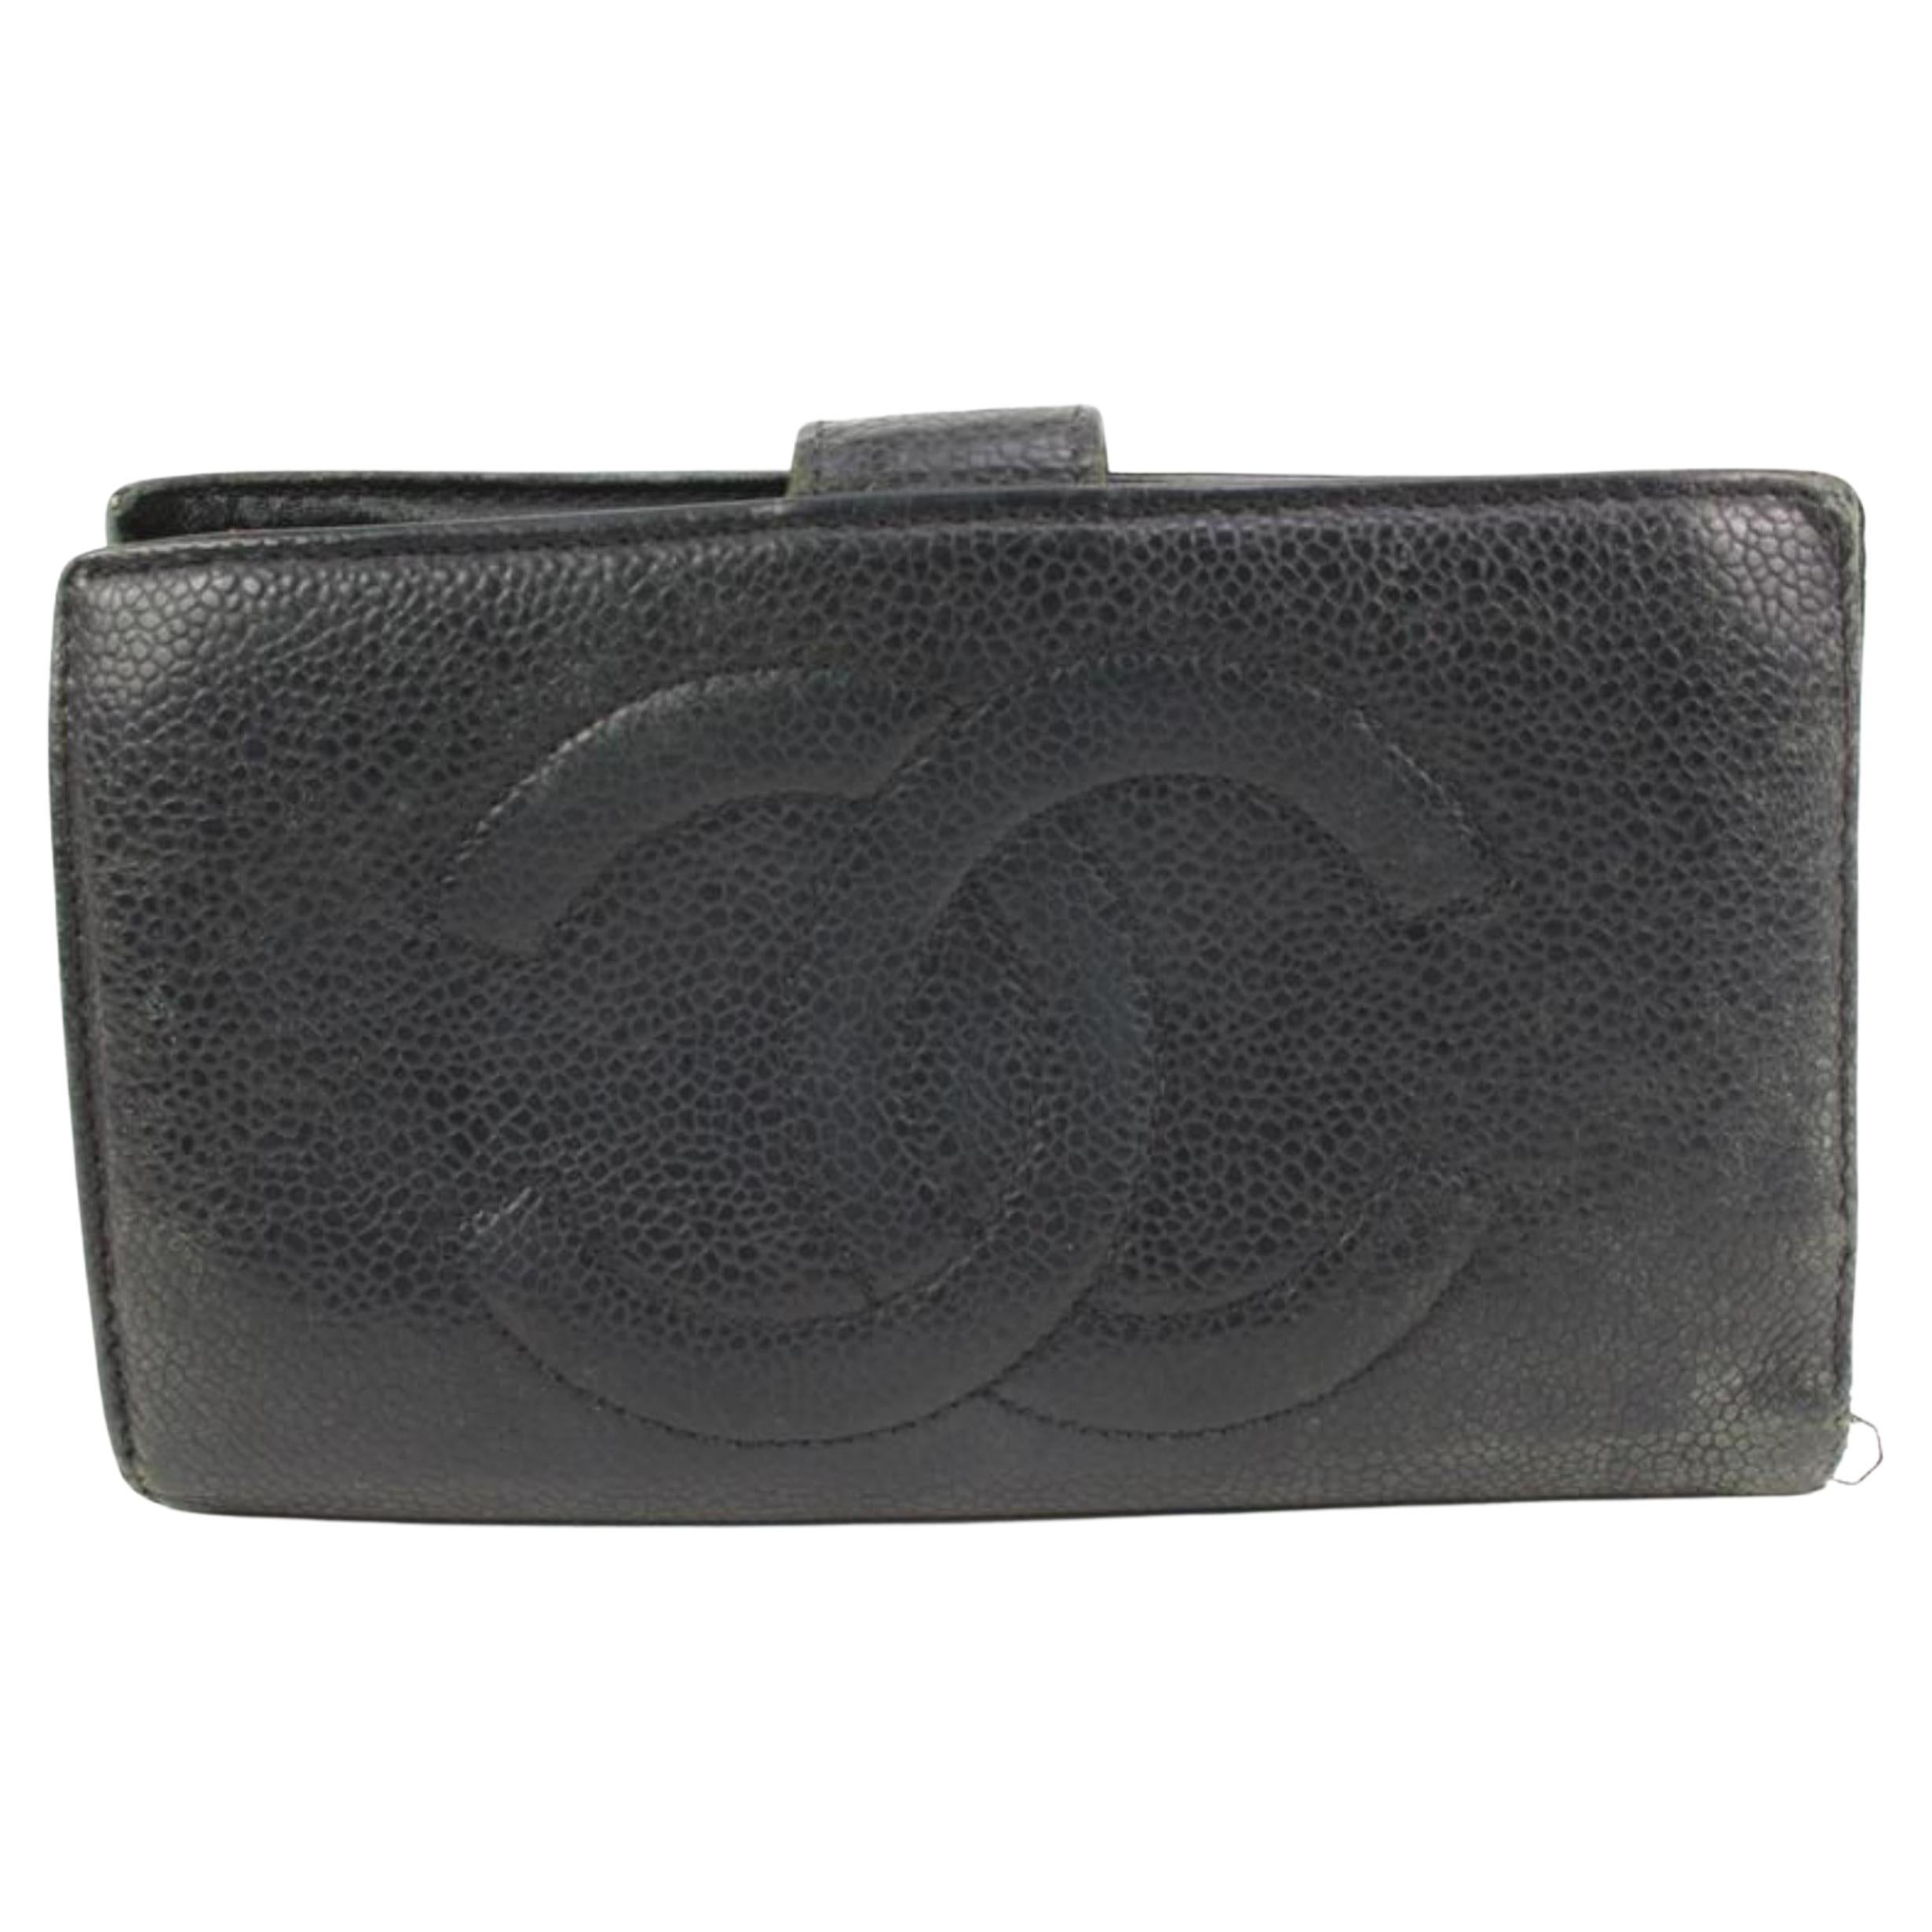 Chanel Black Caviar Leather CC Logo Long Flap Wallet 1214c28